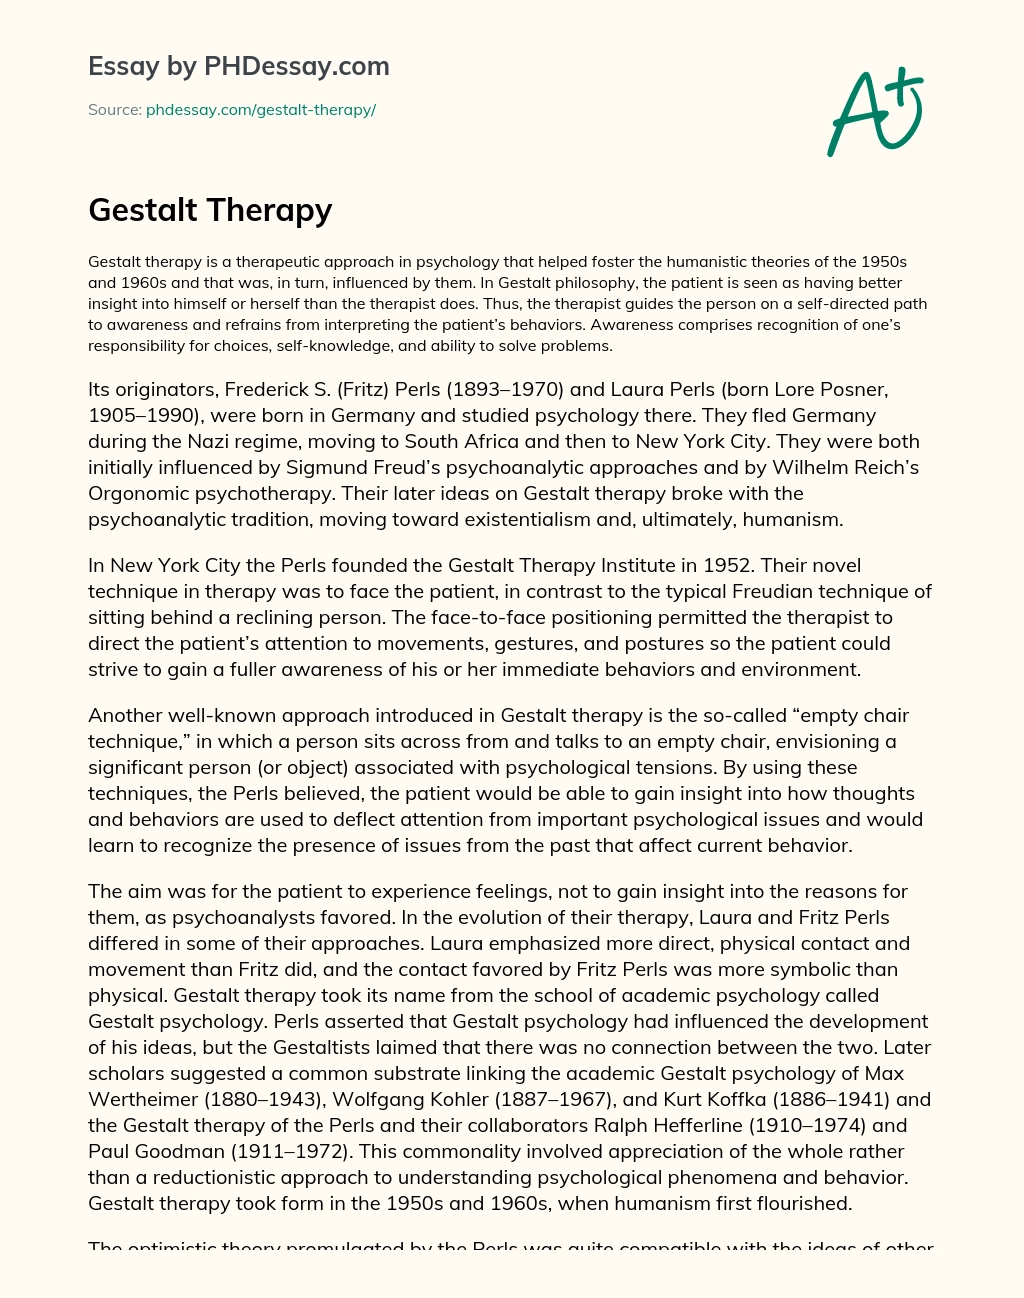 Gestalt Therapy essay